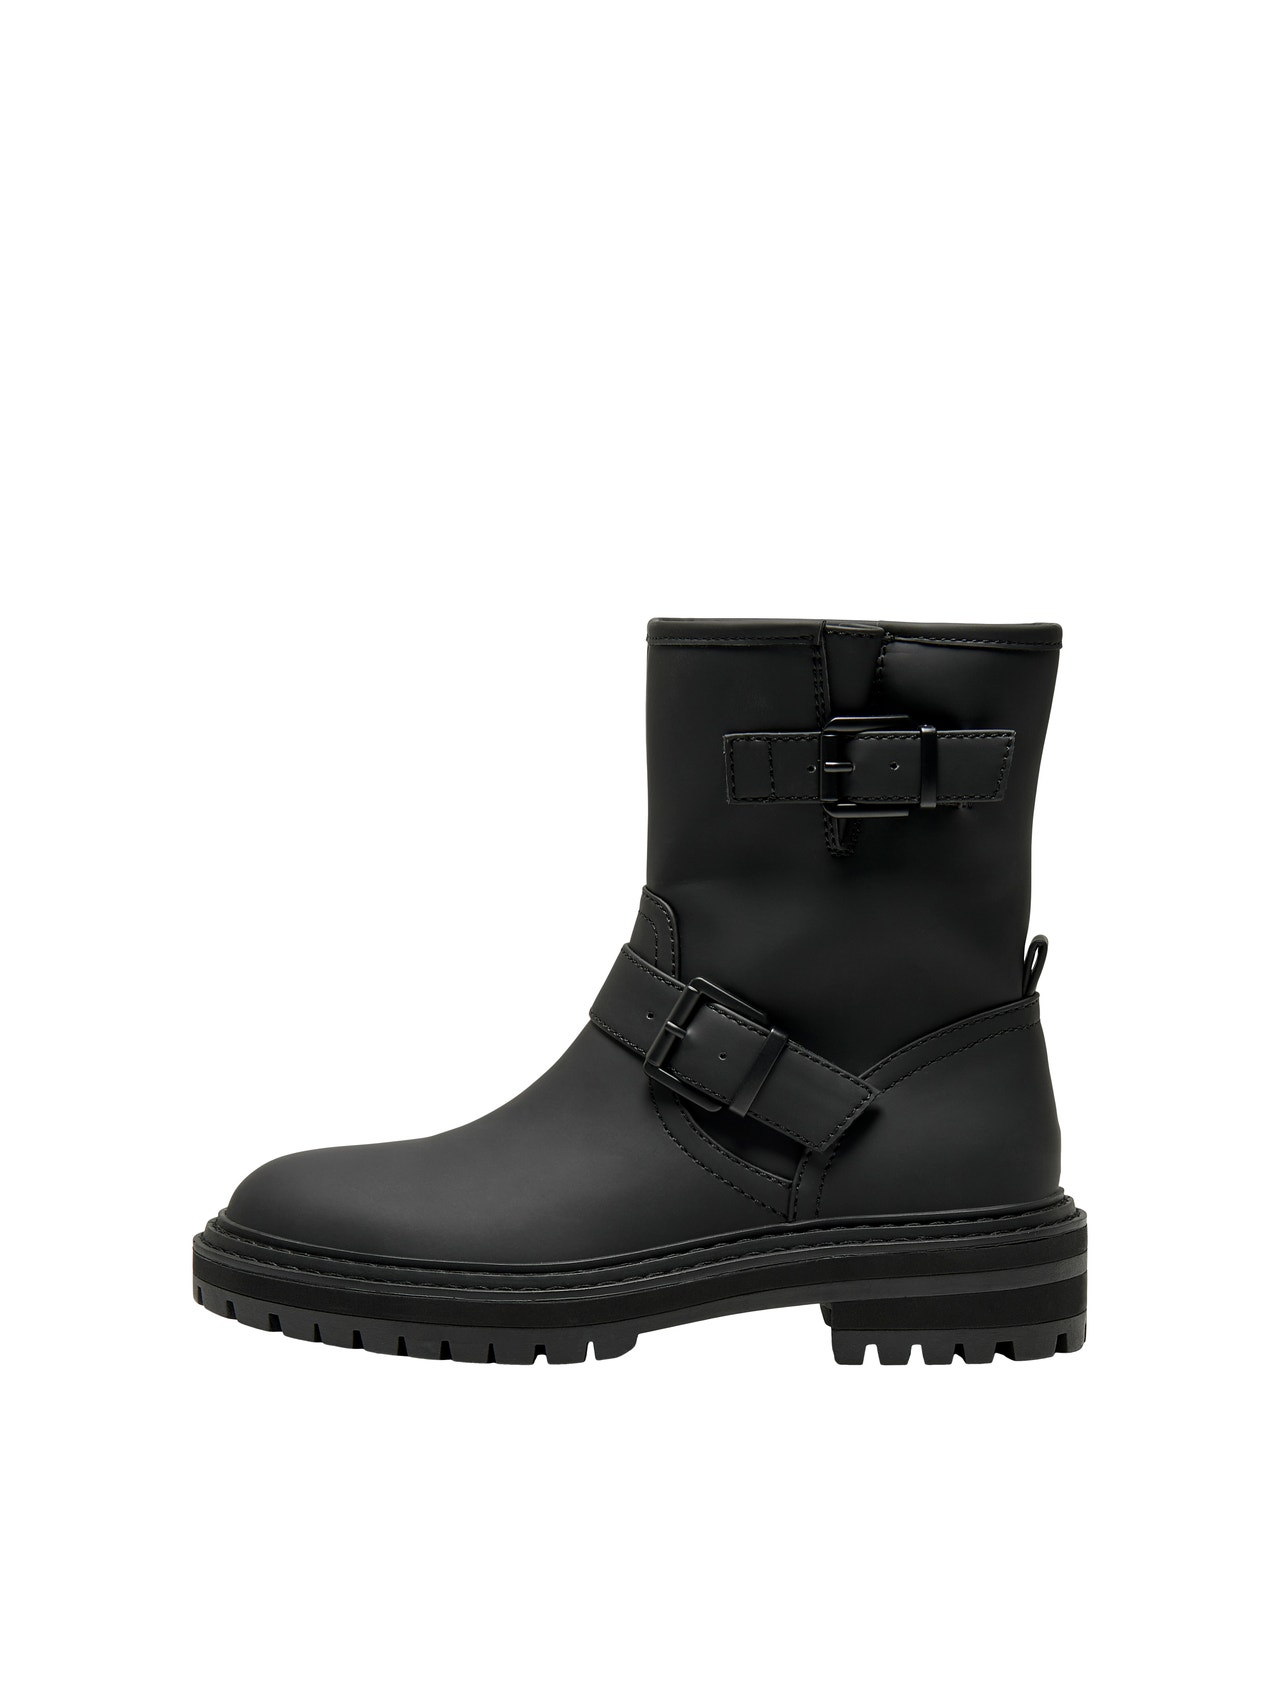 ONLY Water resistant biker boots -Black - 15304988